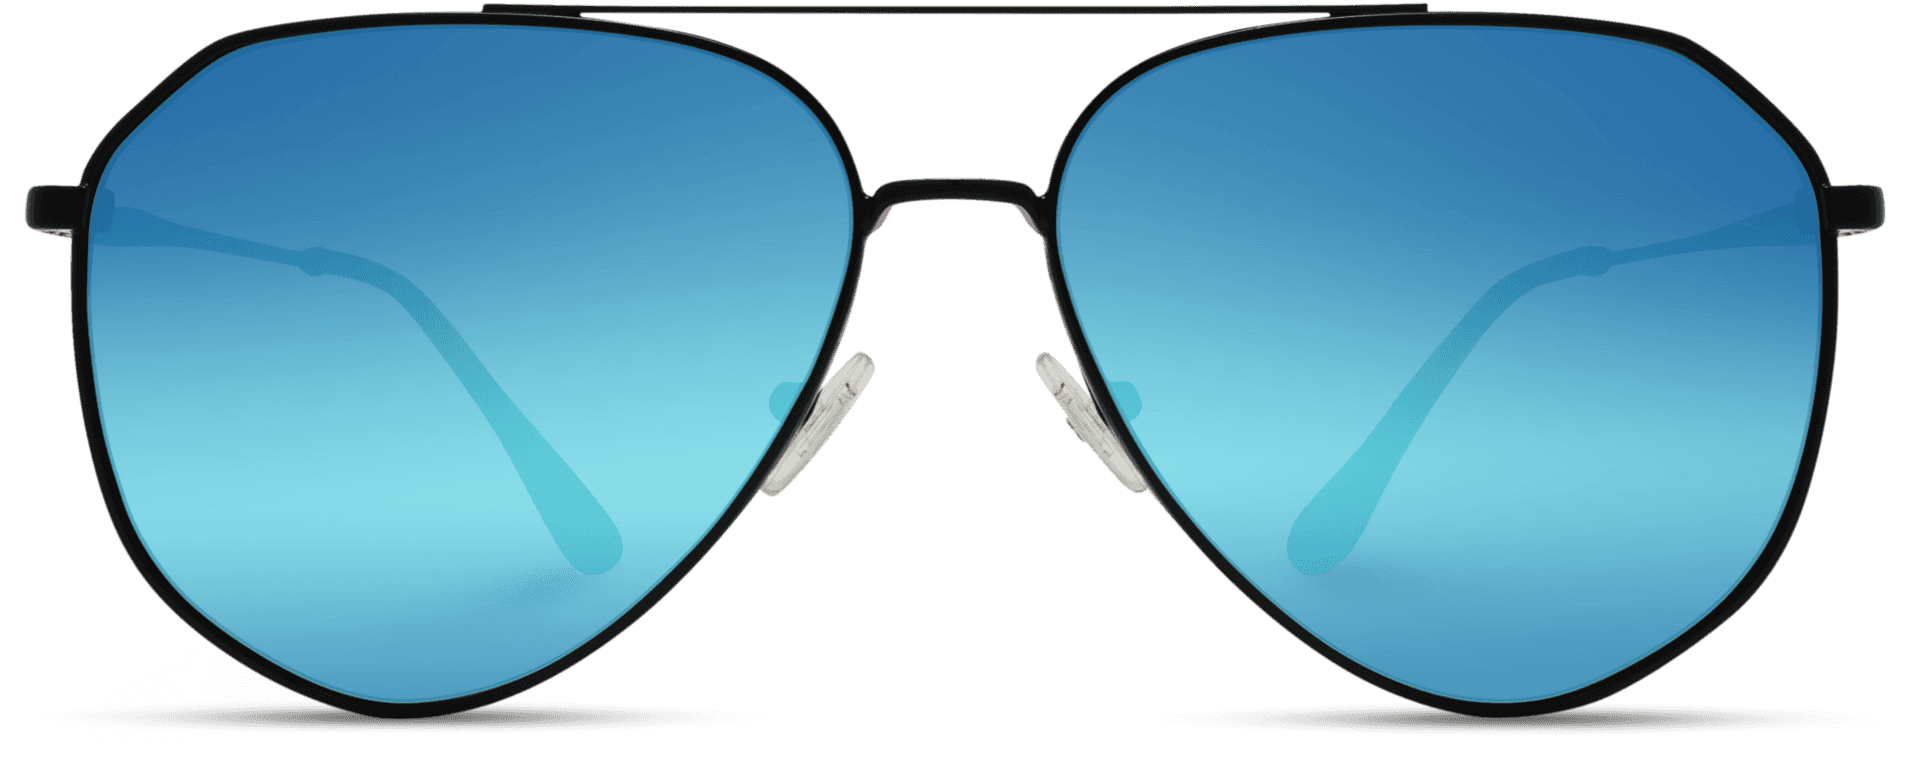 Blue Lens Aviator Sunglasses PNG image